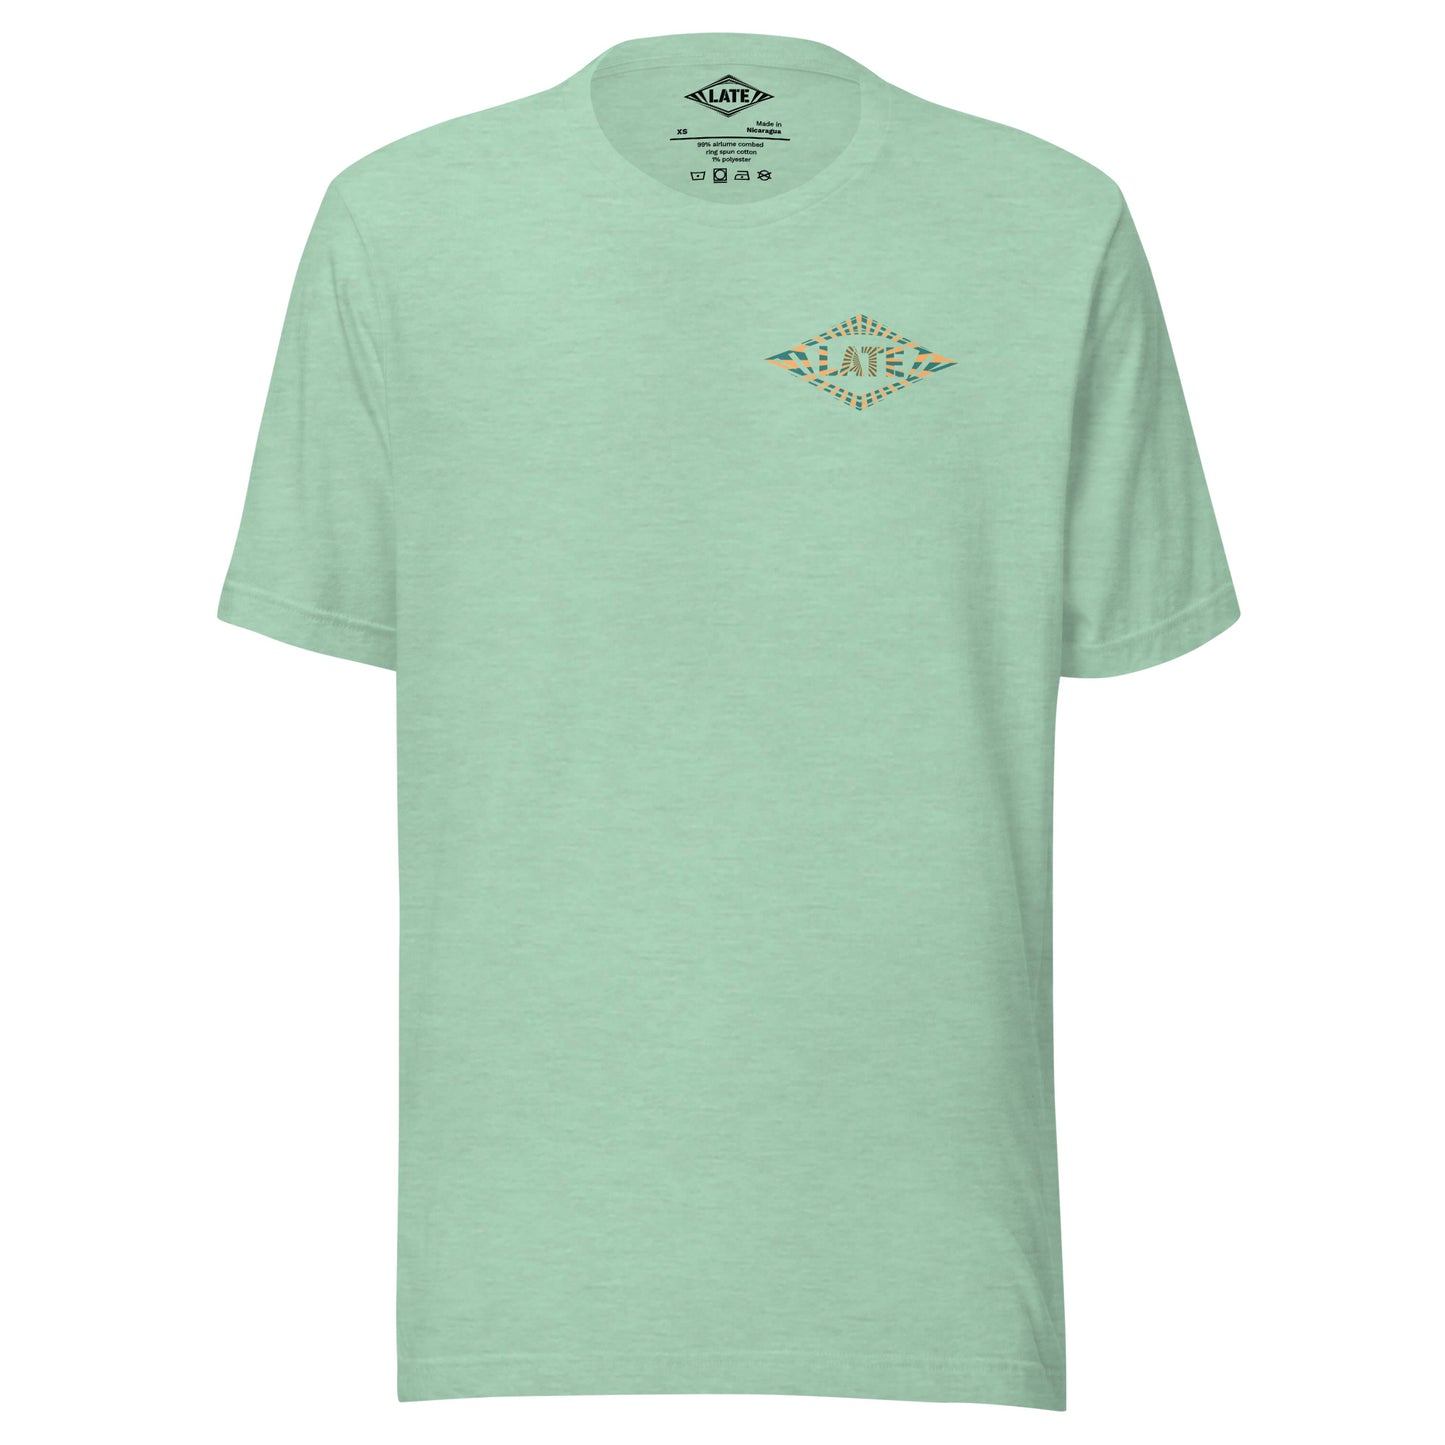 T-Shirt Walk Of Life logo Late surfing design old school hippie tshirt couleur vert menthe